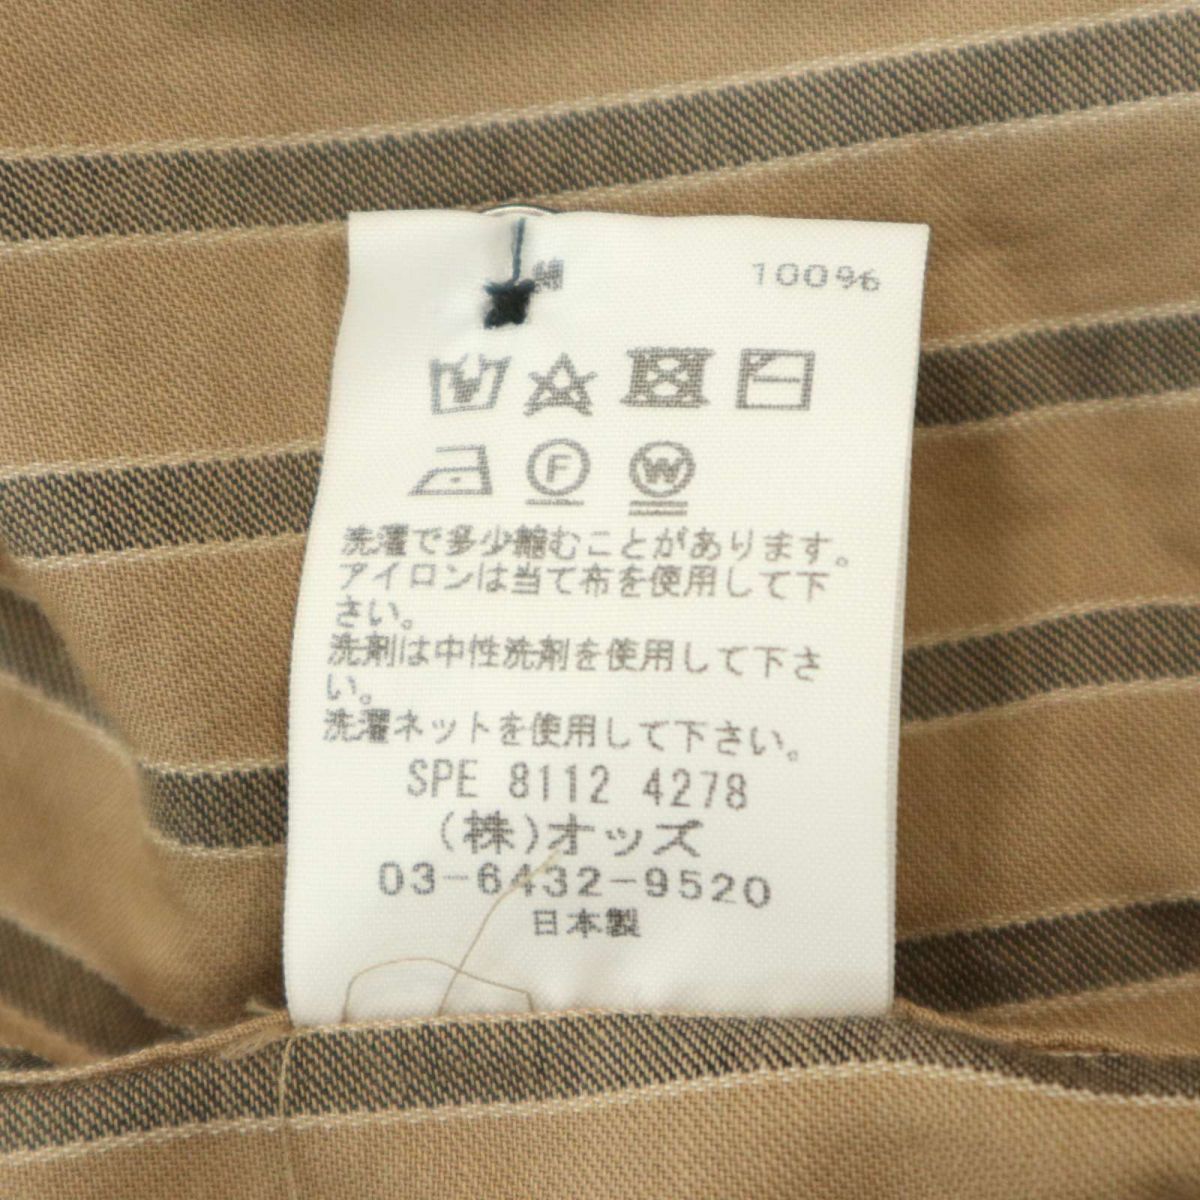 LOUNGE LIZARD Lounge Lizard through year long sleeve band color * stripe shirt Sz.1 men's made in Japan A4T04046_4#C